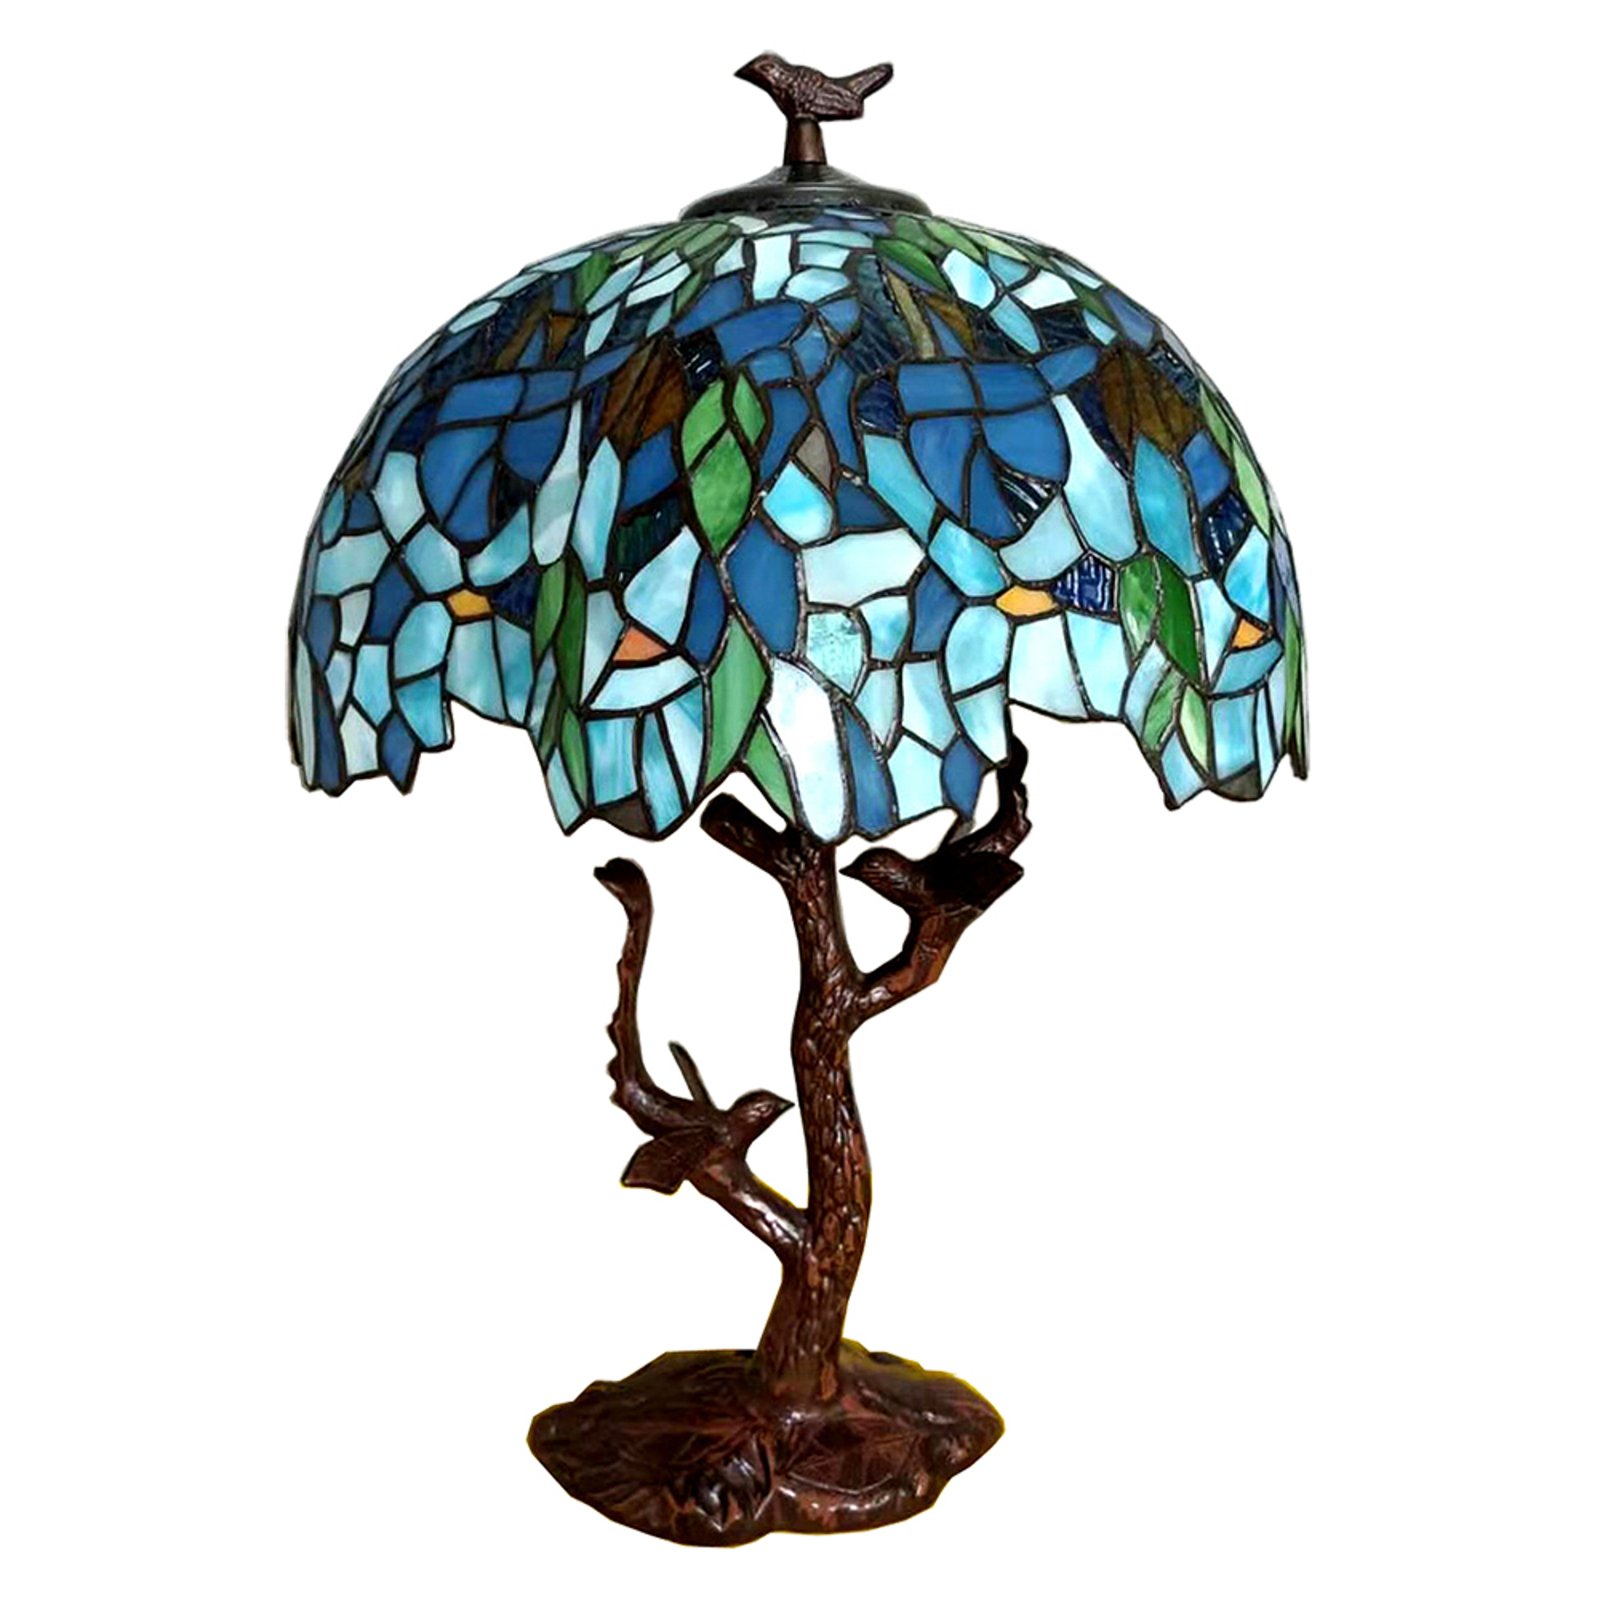 Lampe à poser 5LL-6115 au style Tiffany